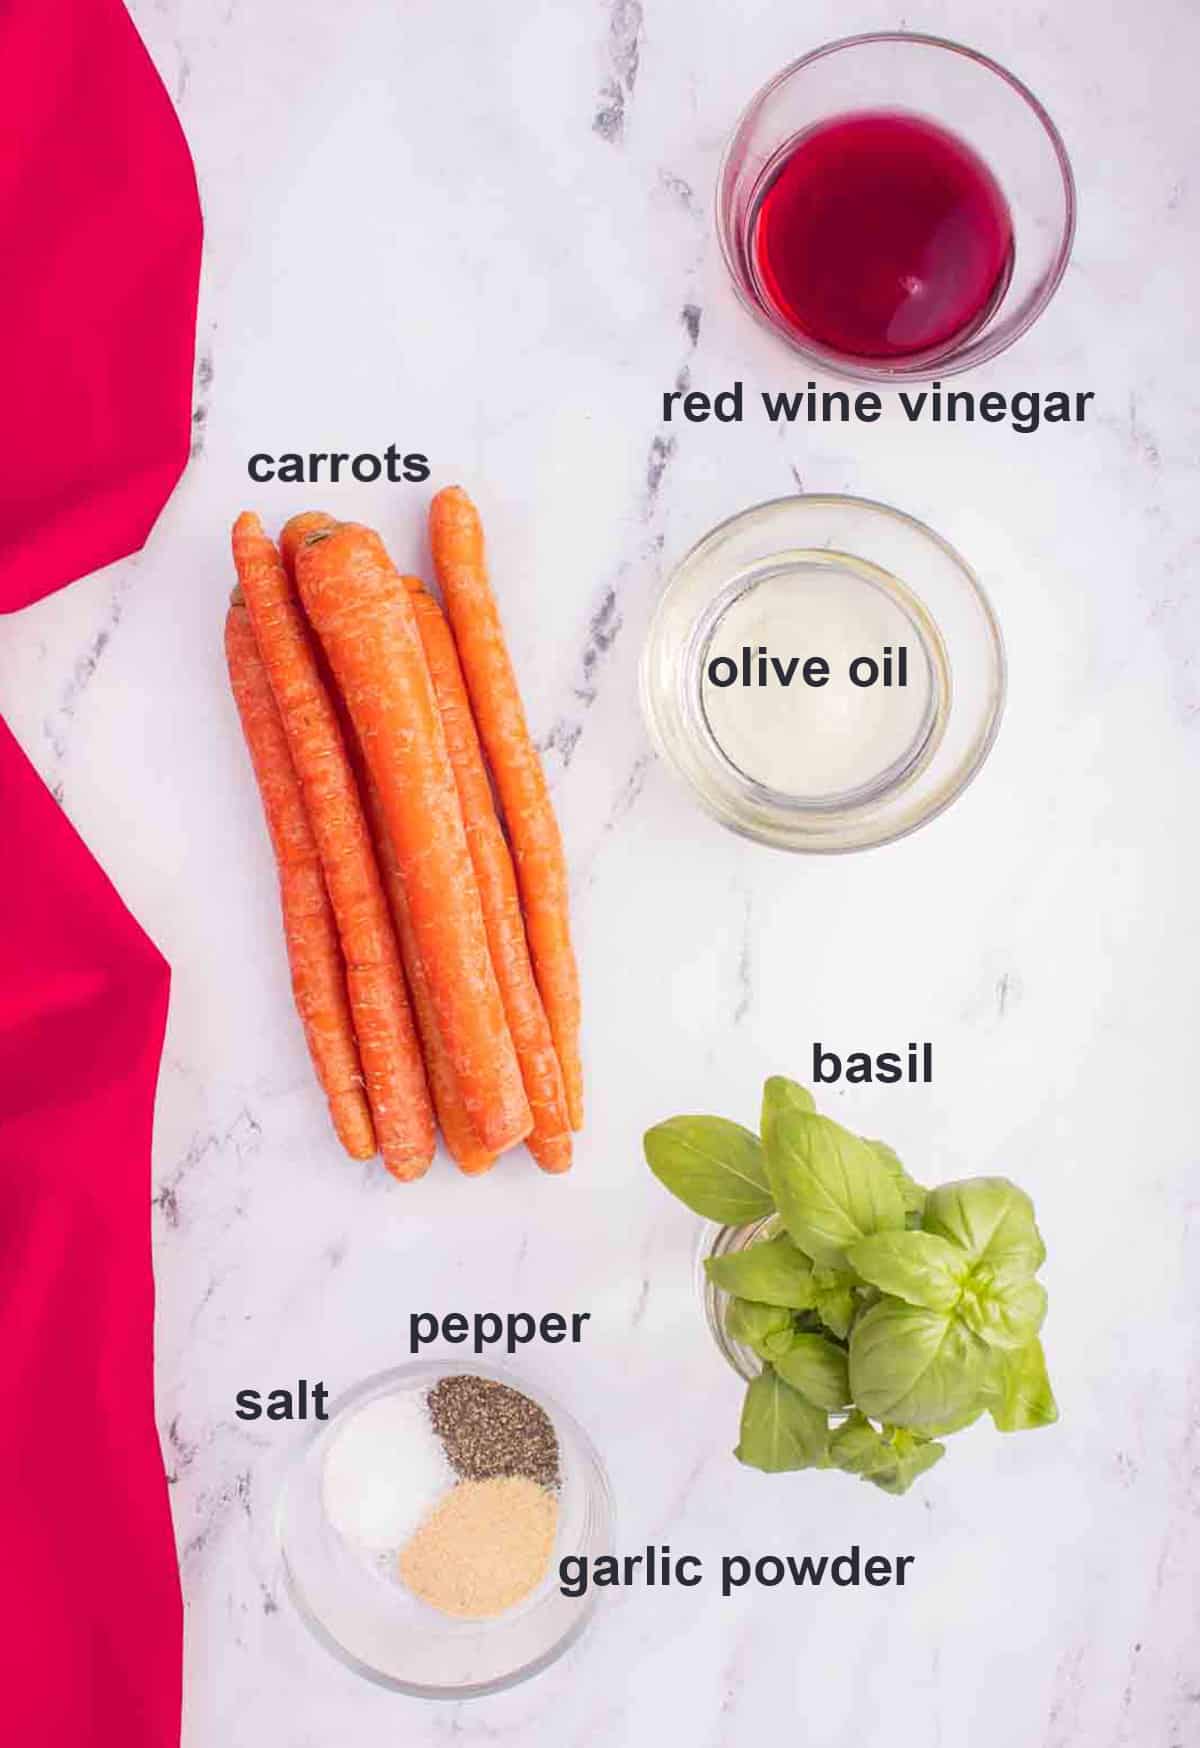 carrots, vinegar, oil, basil, seasonings